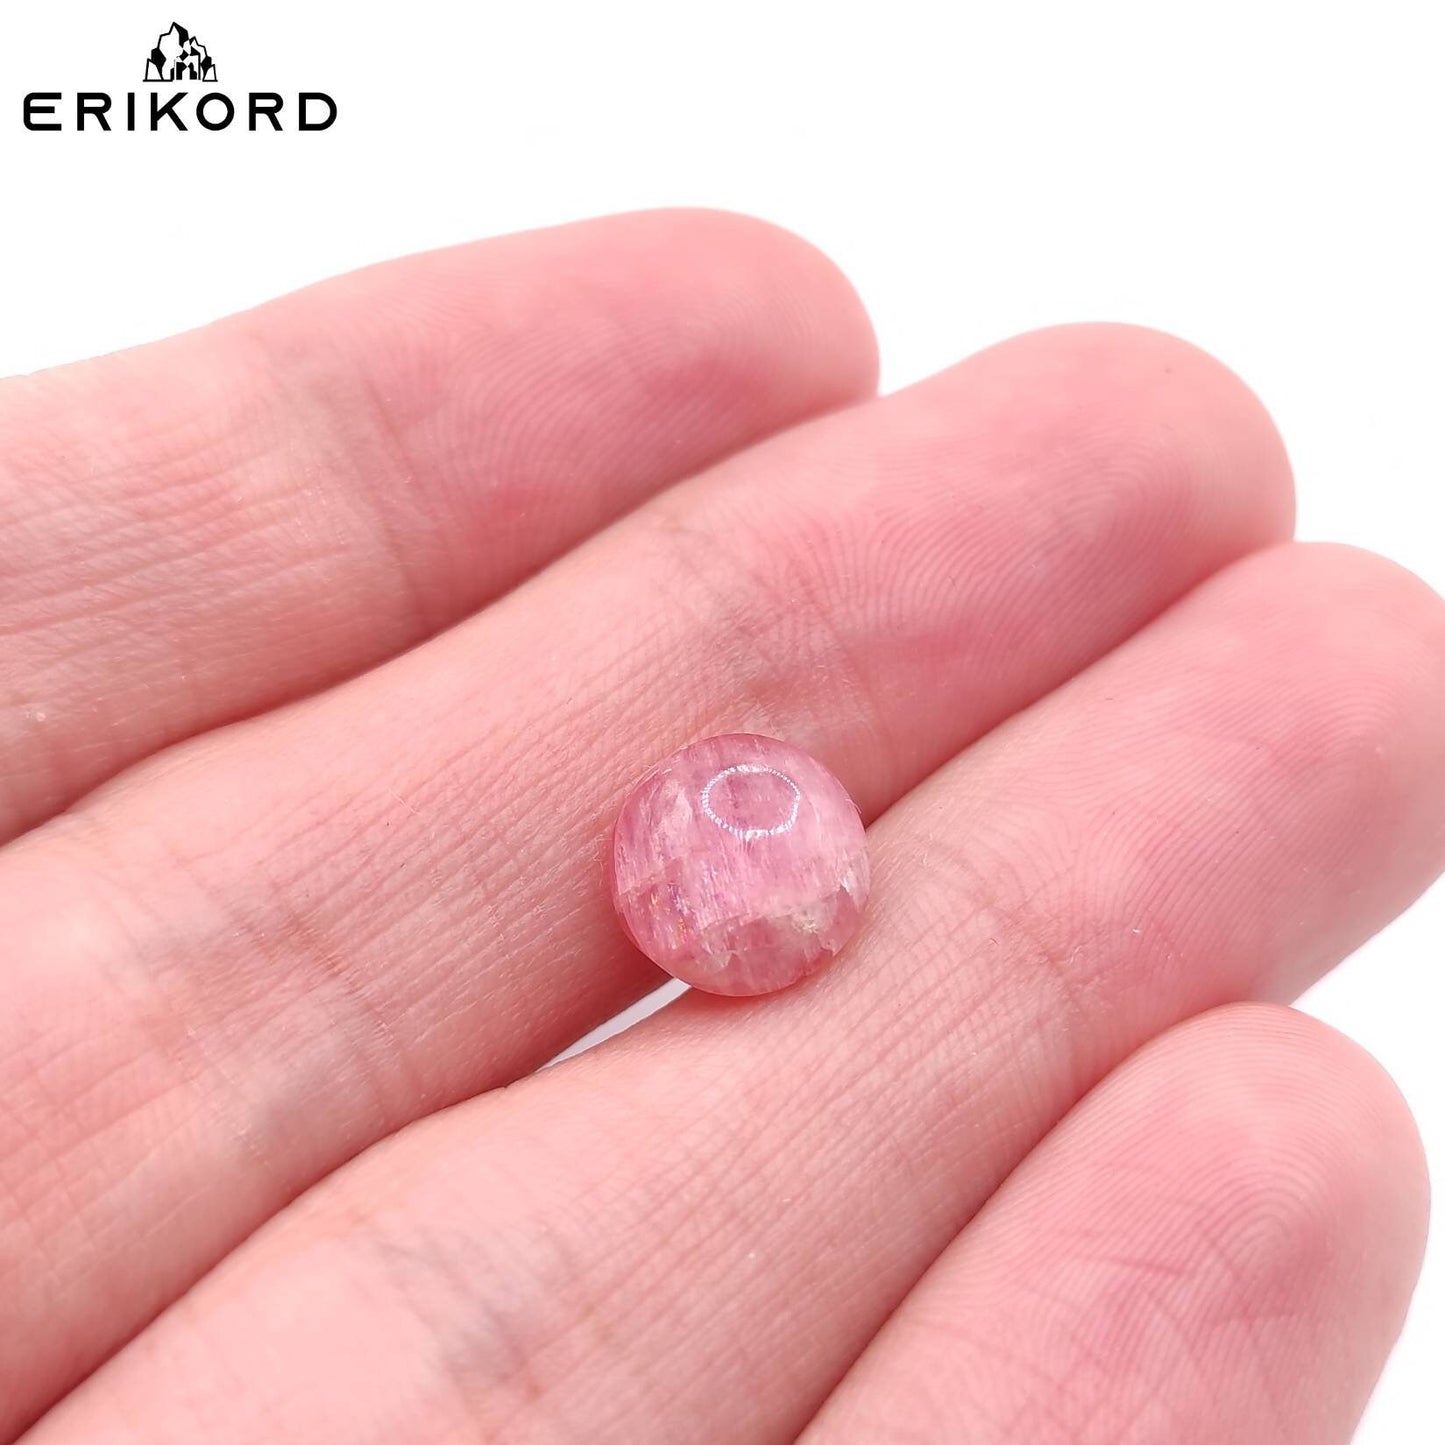 3.35ct Pezzottaite Super Rare Gems Round Polished Cabcohon Pezzottaite from Madagascar Raspberry Pink Beryl Gem Gemstone Natural Untreated